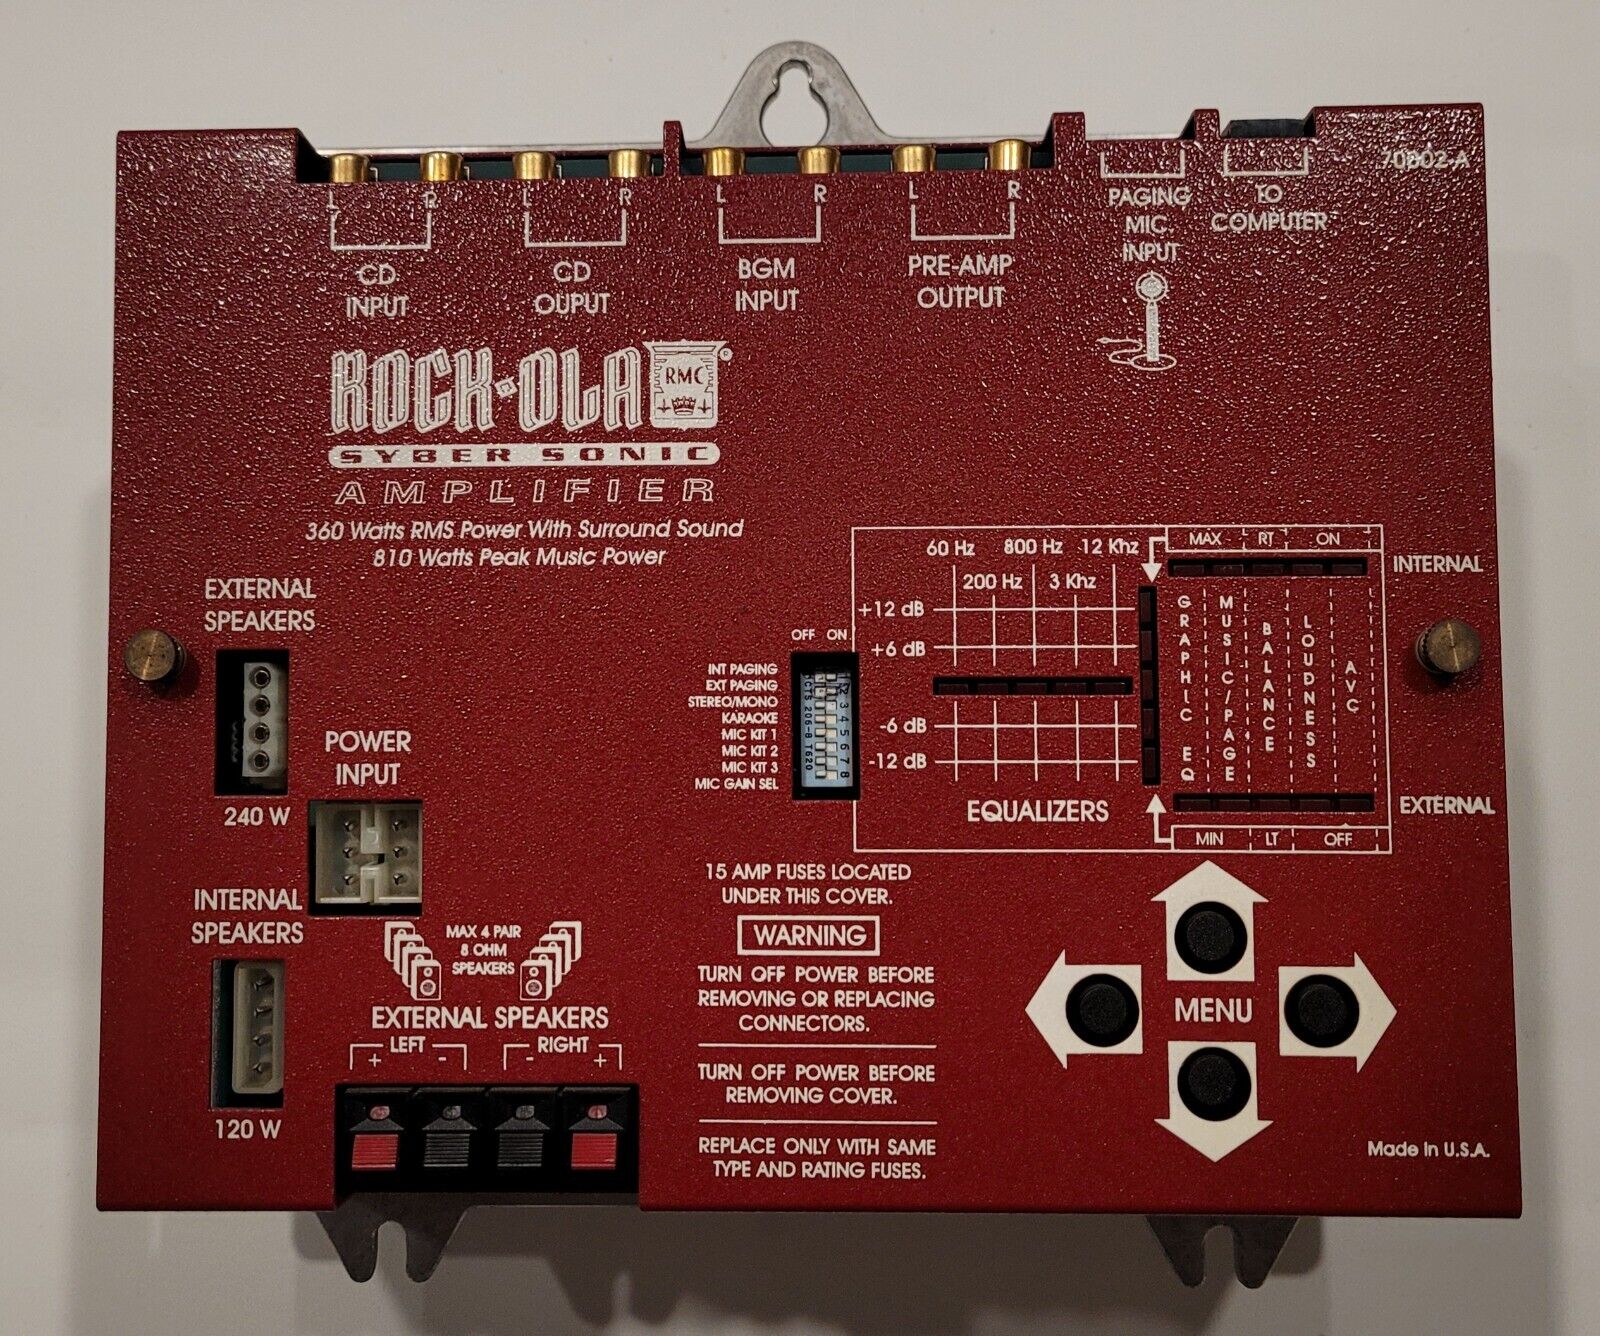 Rock-ola CD Jukebox RED Amplifier, 360 watt Syber Sonic 70002-A, ASSY PN 58438-A